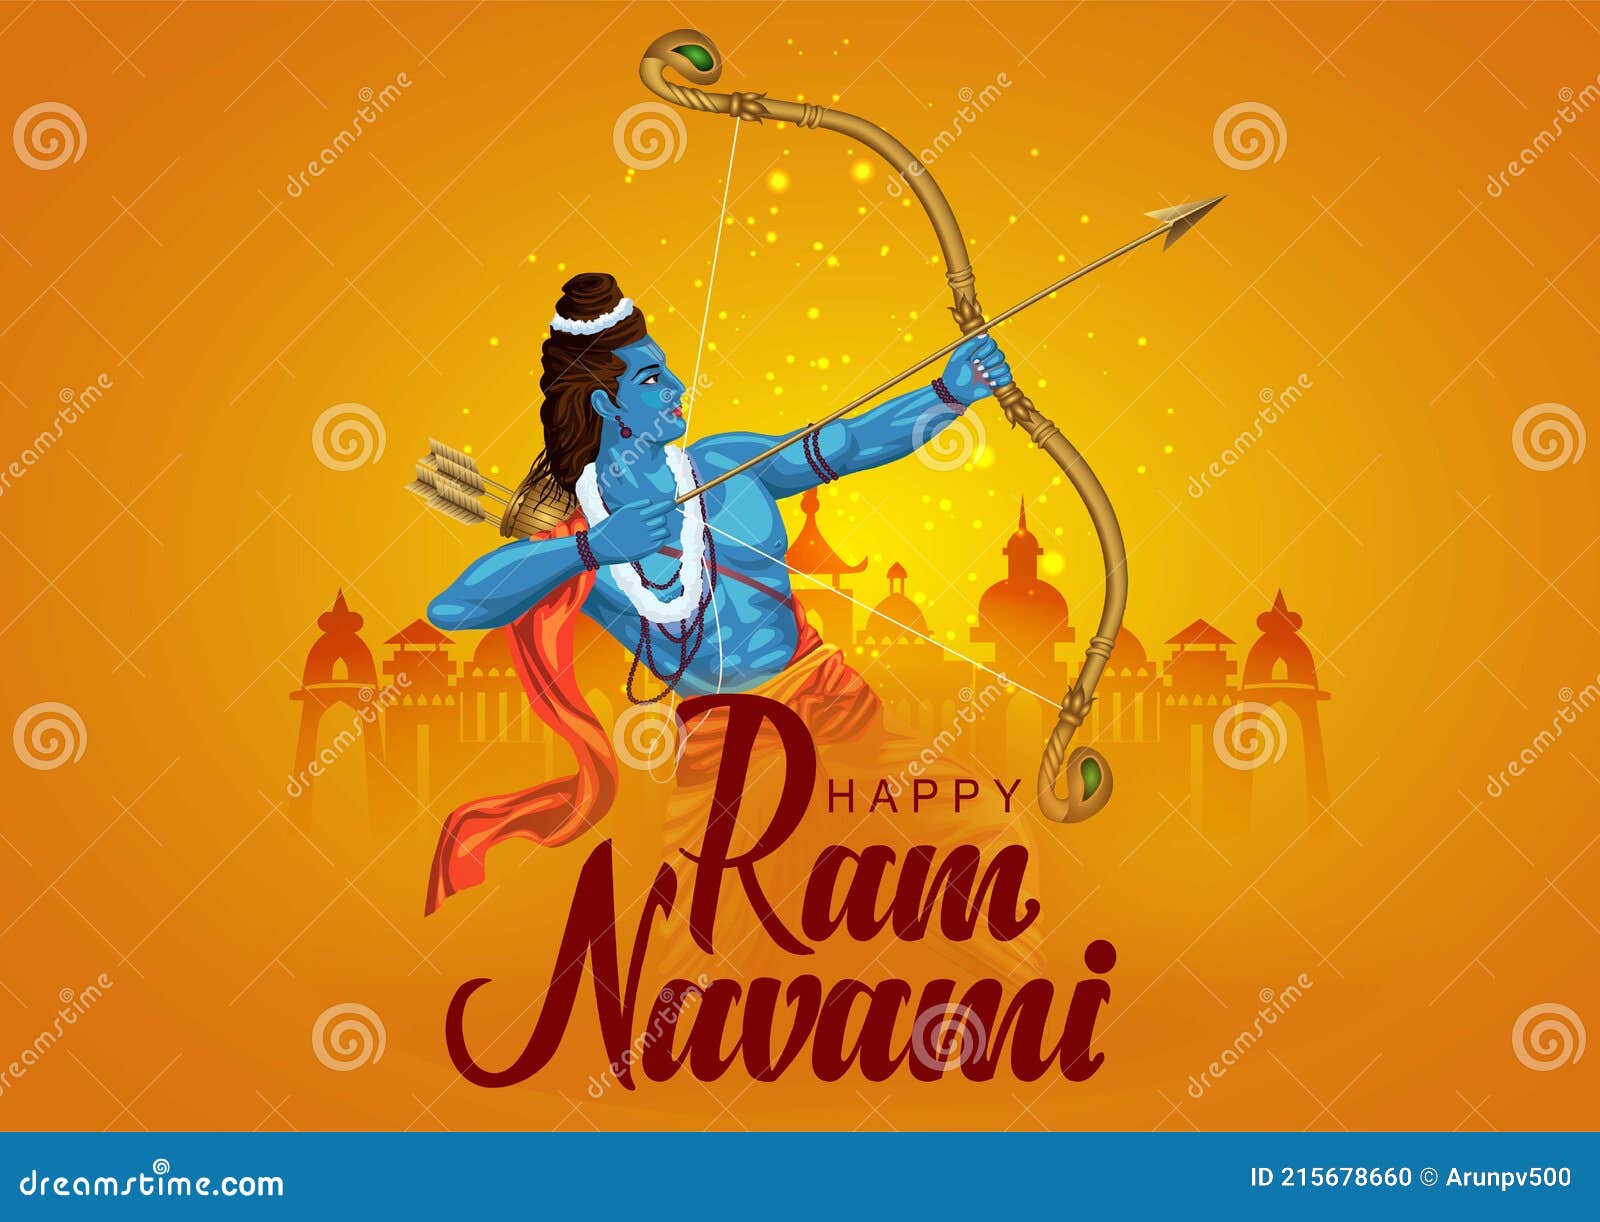 happy ram navami festival of india. lord rama with arrow.   